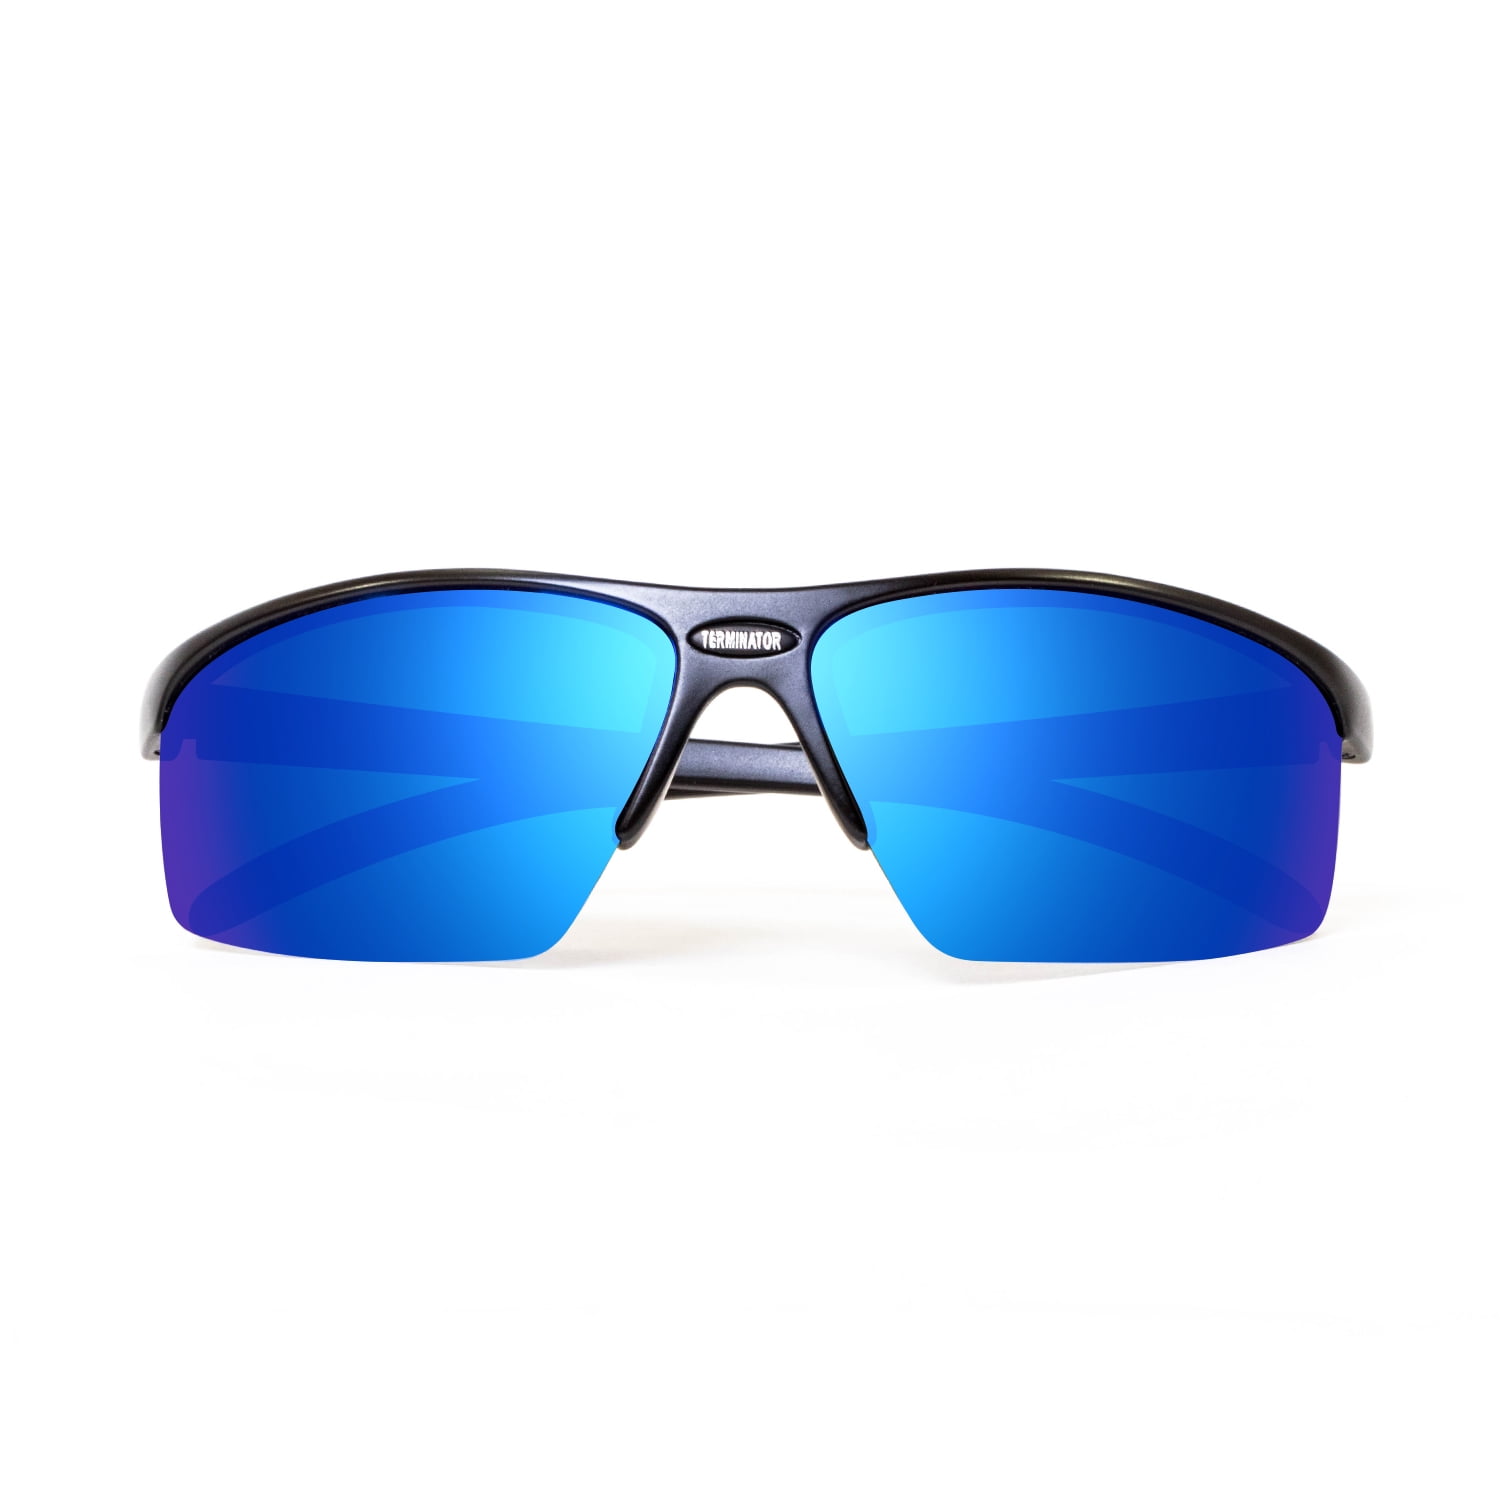 Terminator Polarized Outdoor Sunglasses for Men Women - Cyborg 1 Pair -